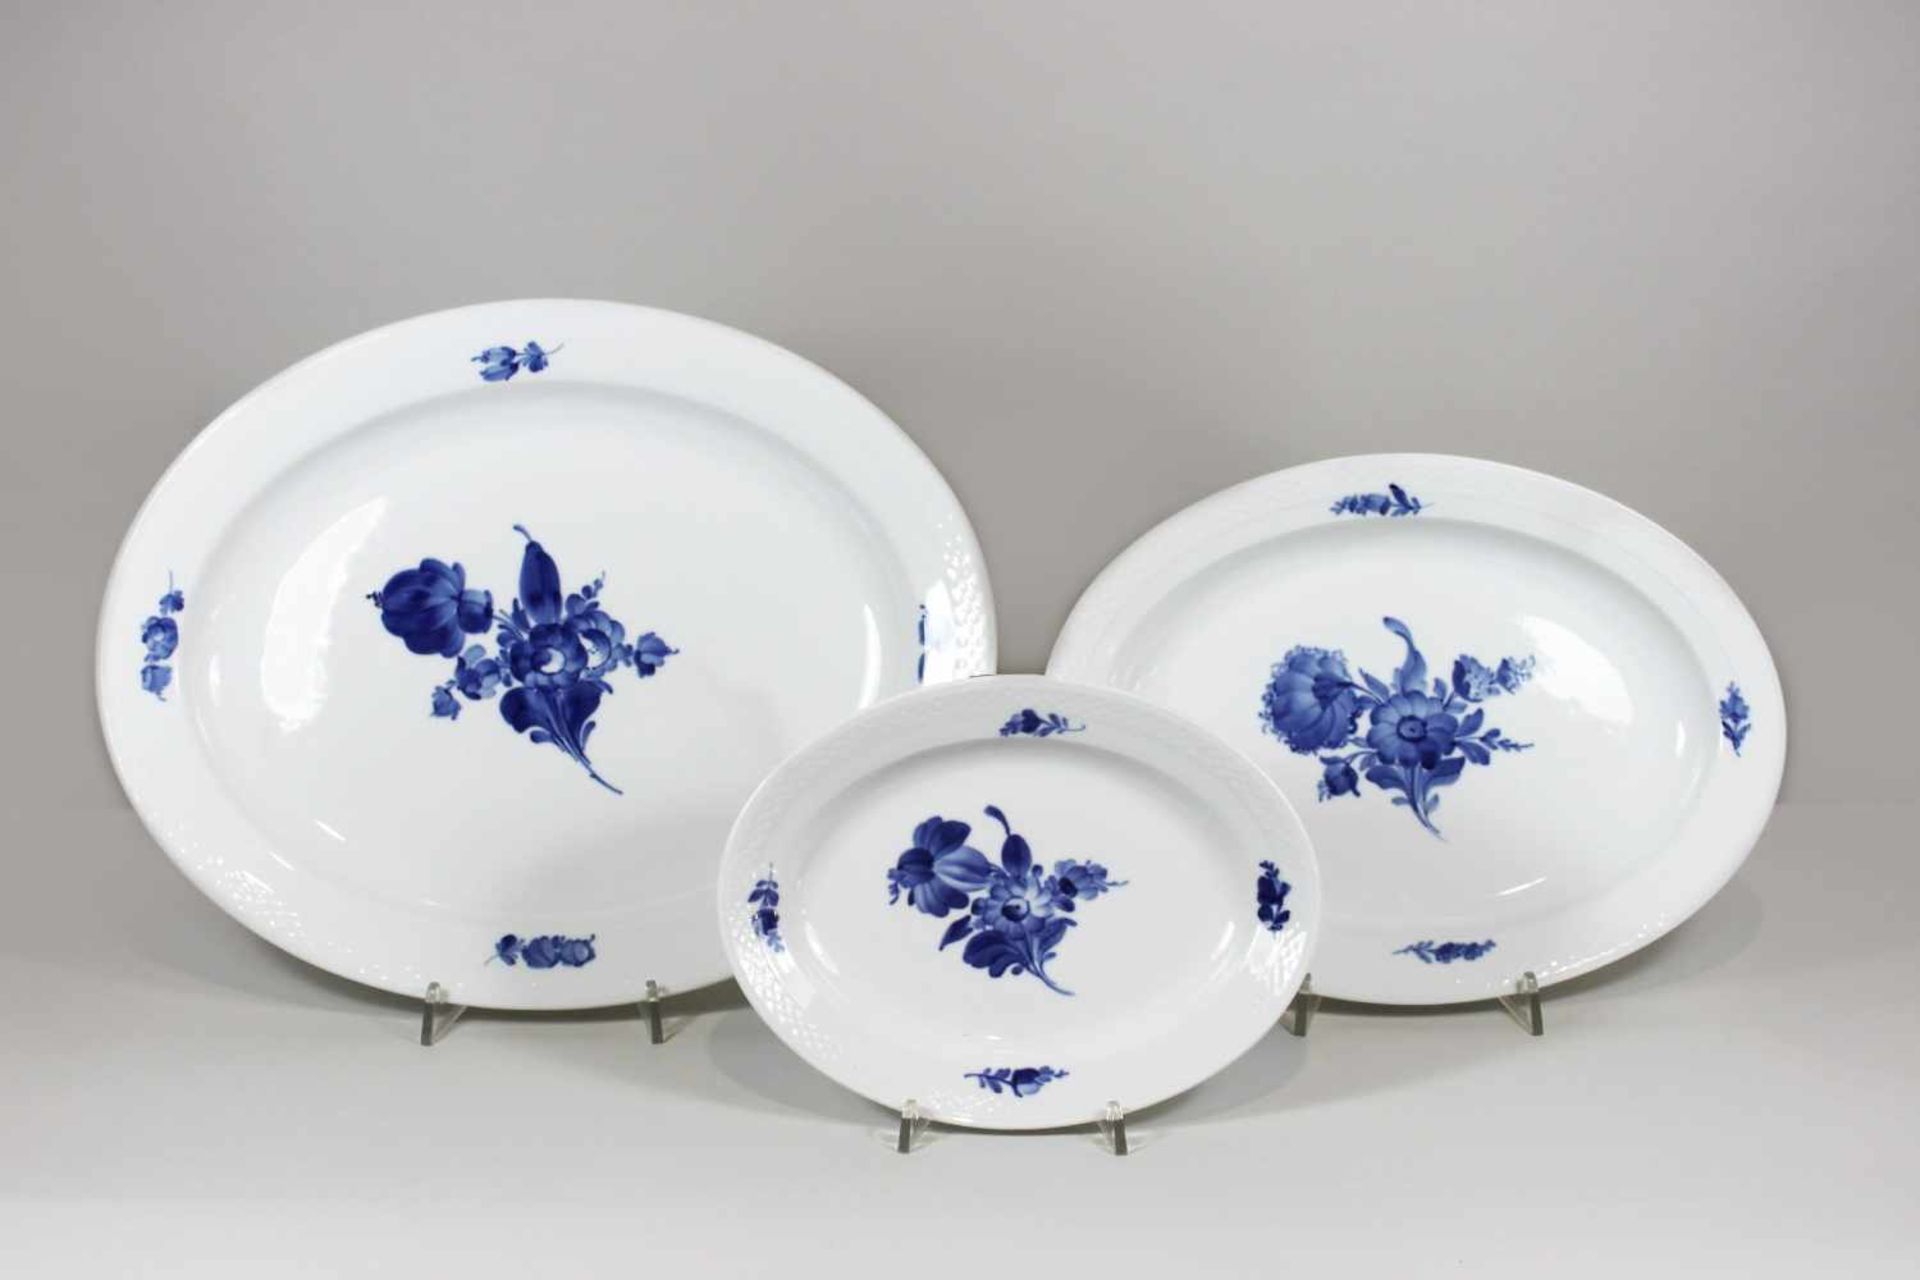 3 Platten Blaue Blume, Royal Copenhagen, 1. Wahl, Ovalplatten, Modellnr.: 10-8015, Maße: 25 x 19 cm,